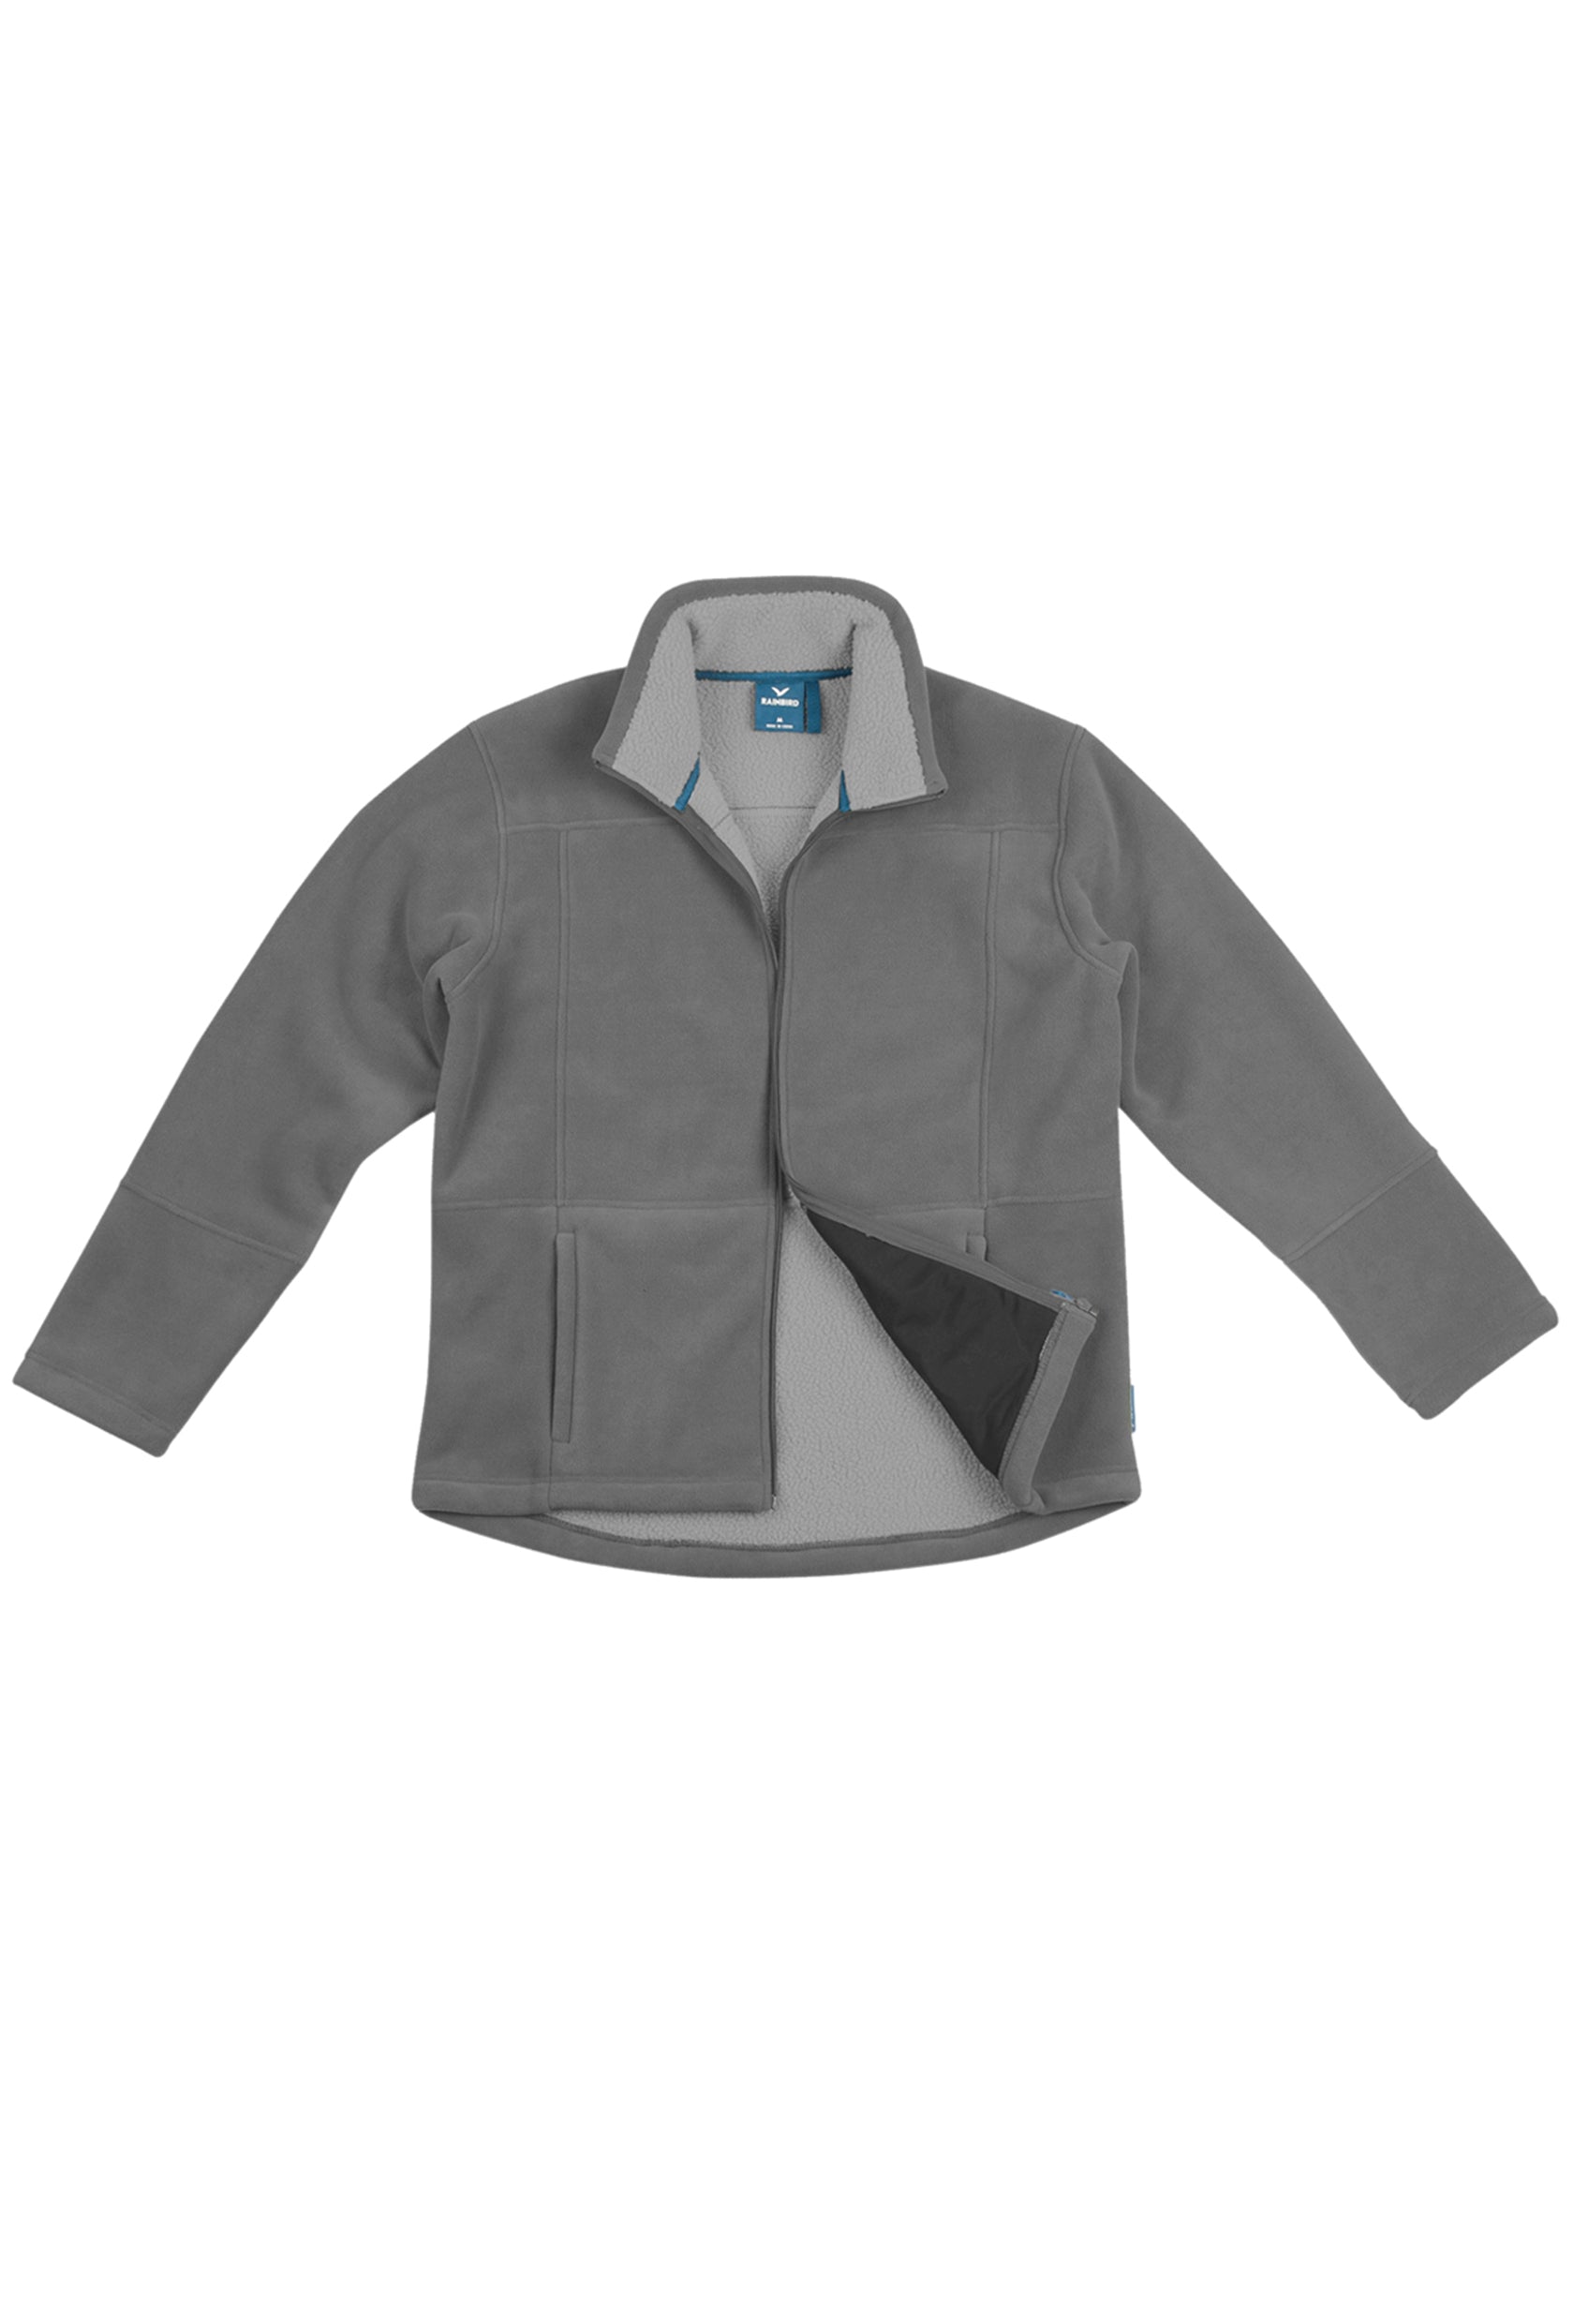 Tec Fleece operator Jacket - Kit Bag Perth